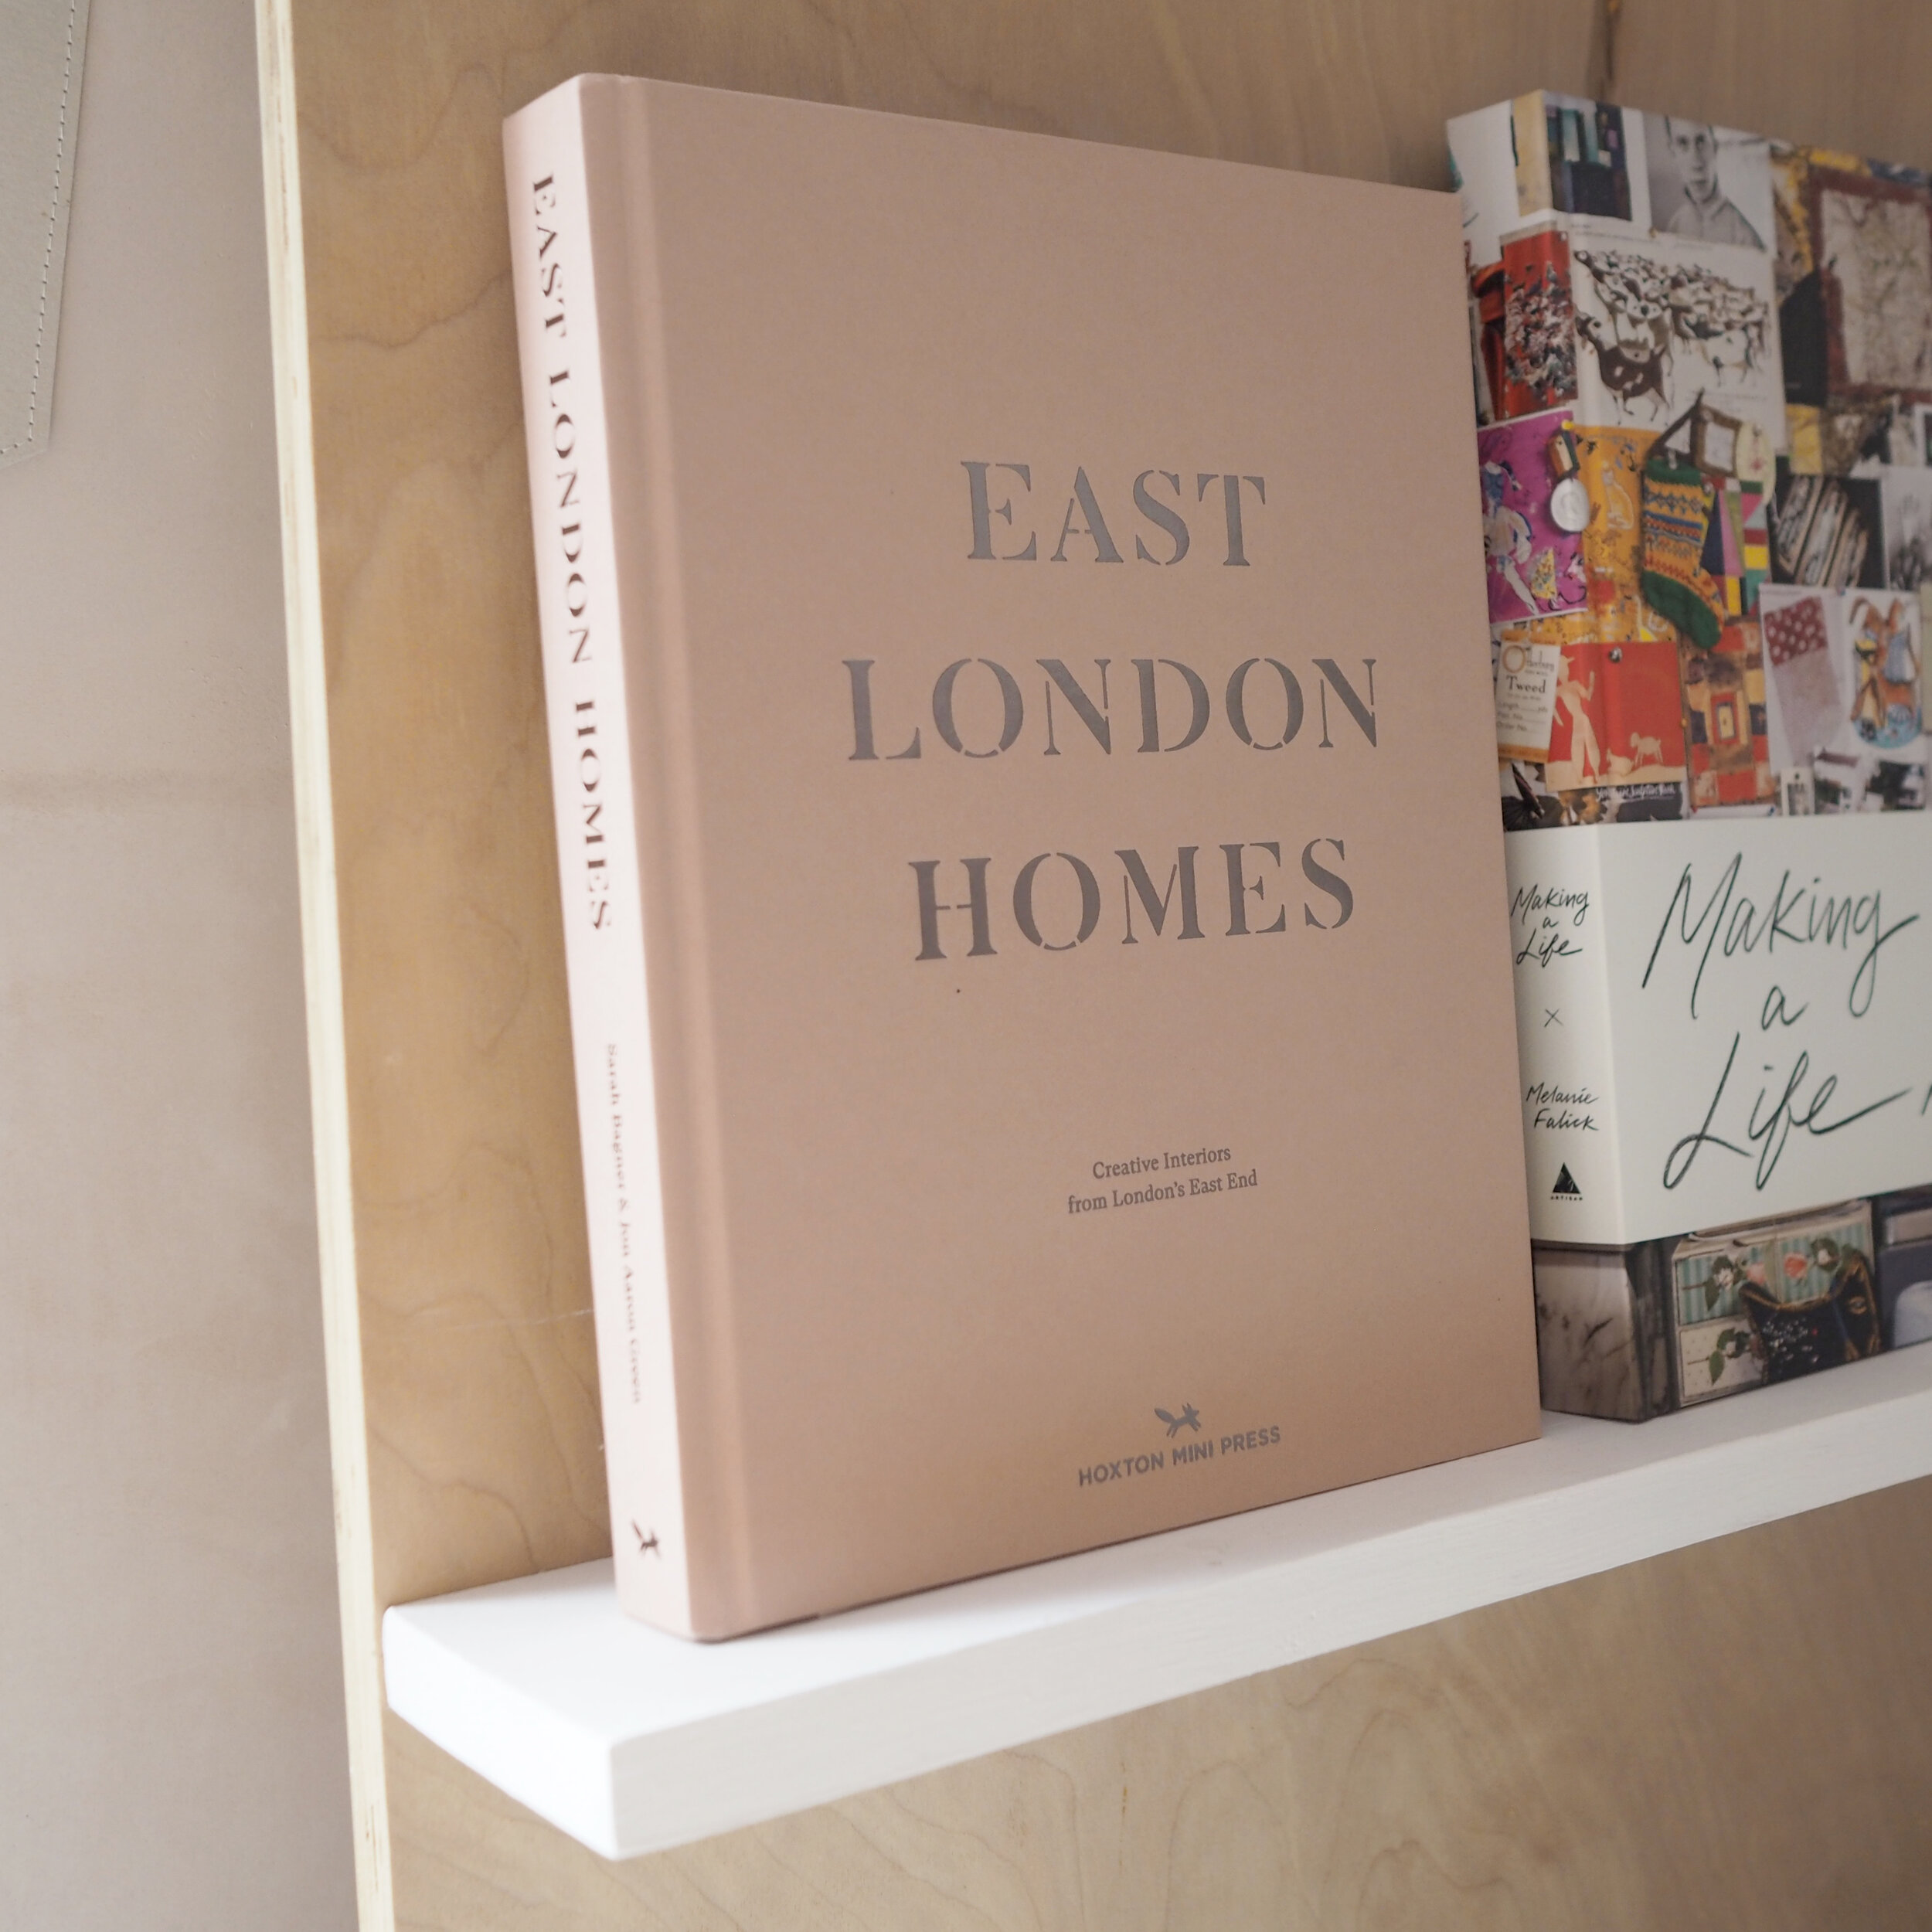 East London Homes by Sarah Bagner & Jon Aaron Green